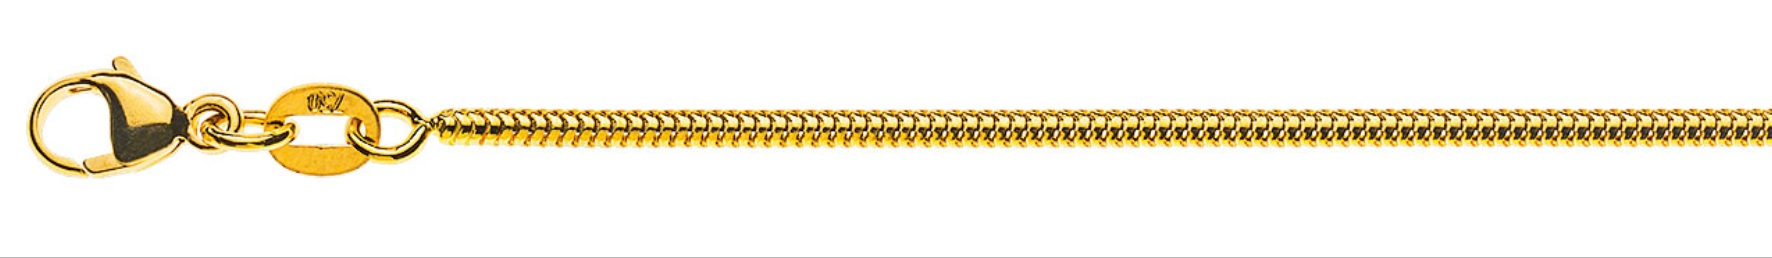 AURONOS Prestige Necklace yellow gold 18K snake chain 50cm 1.6mm